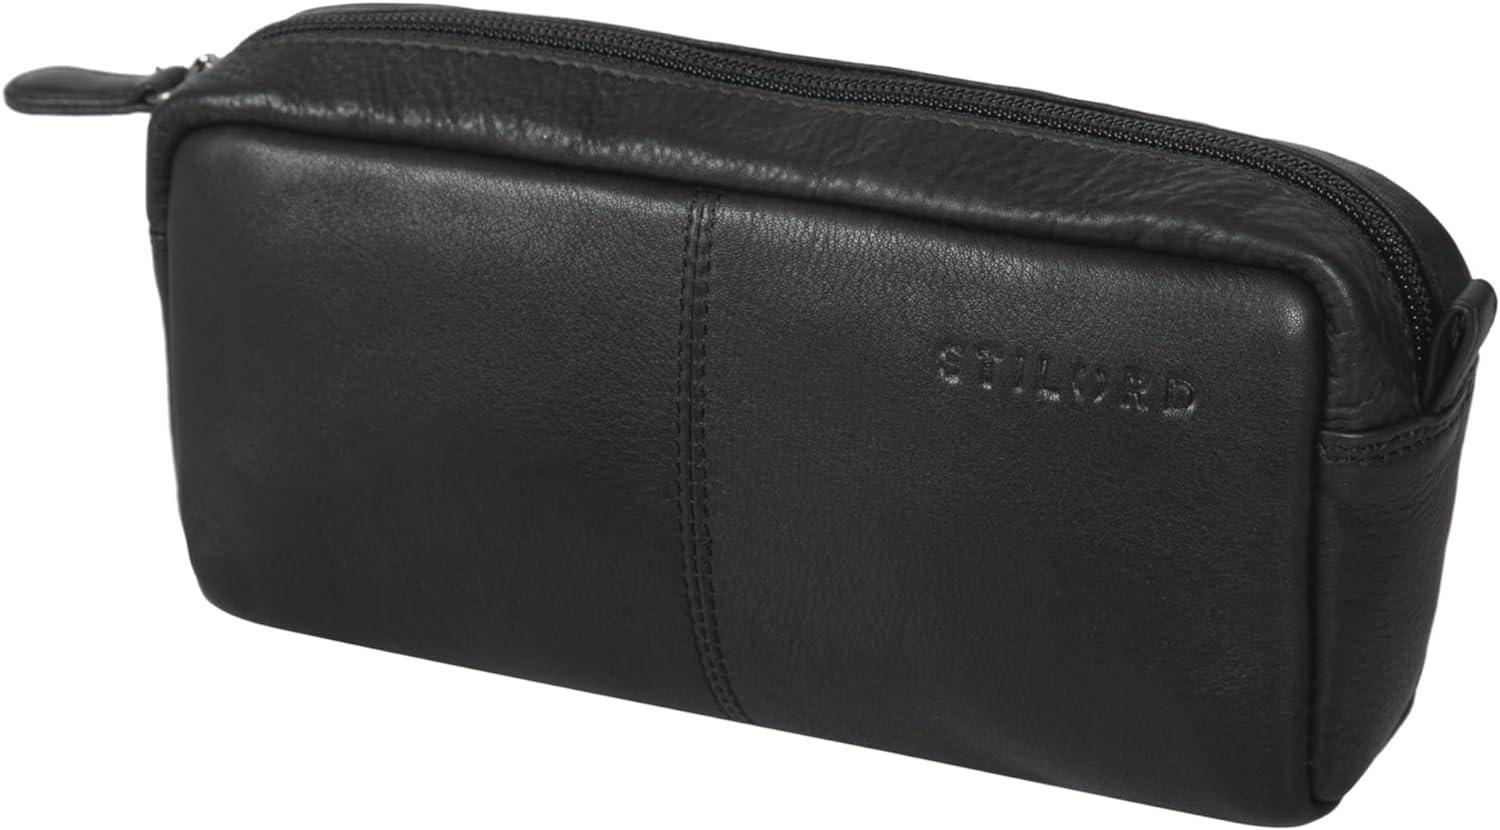 stilord spencer vintage pencil pouch leather pen case holder with zipper makeup bag leather colour black 